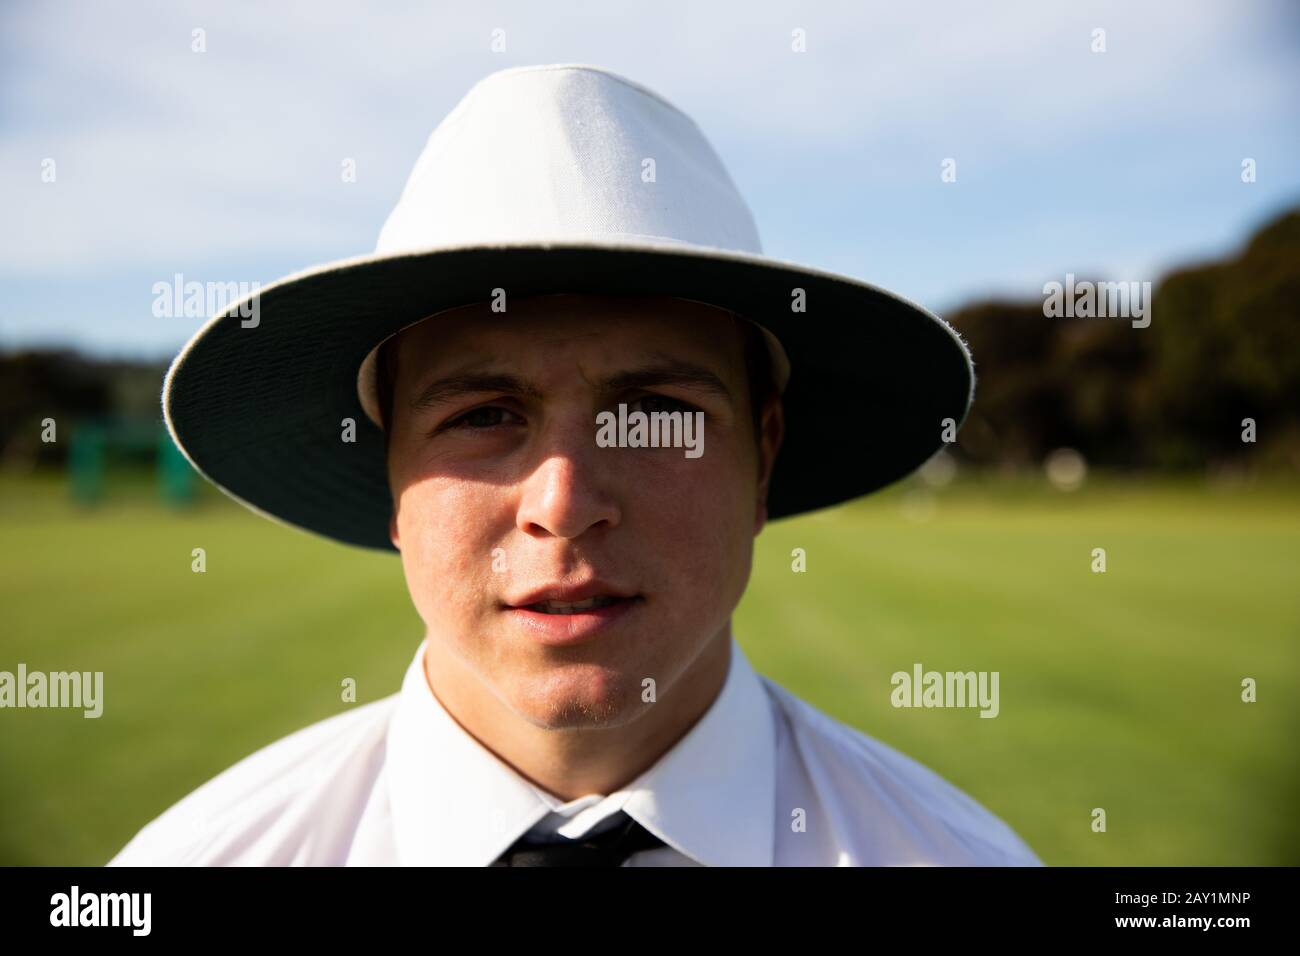 Cricket player looking at the camera Stock Photo